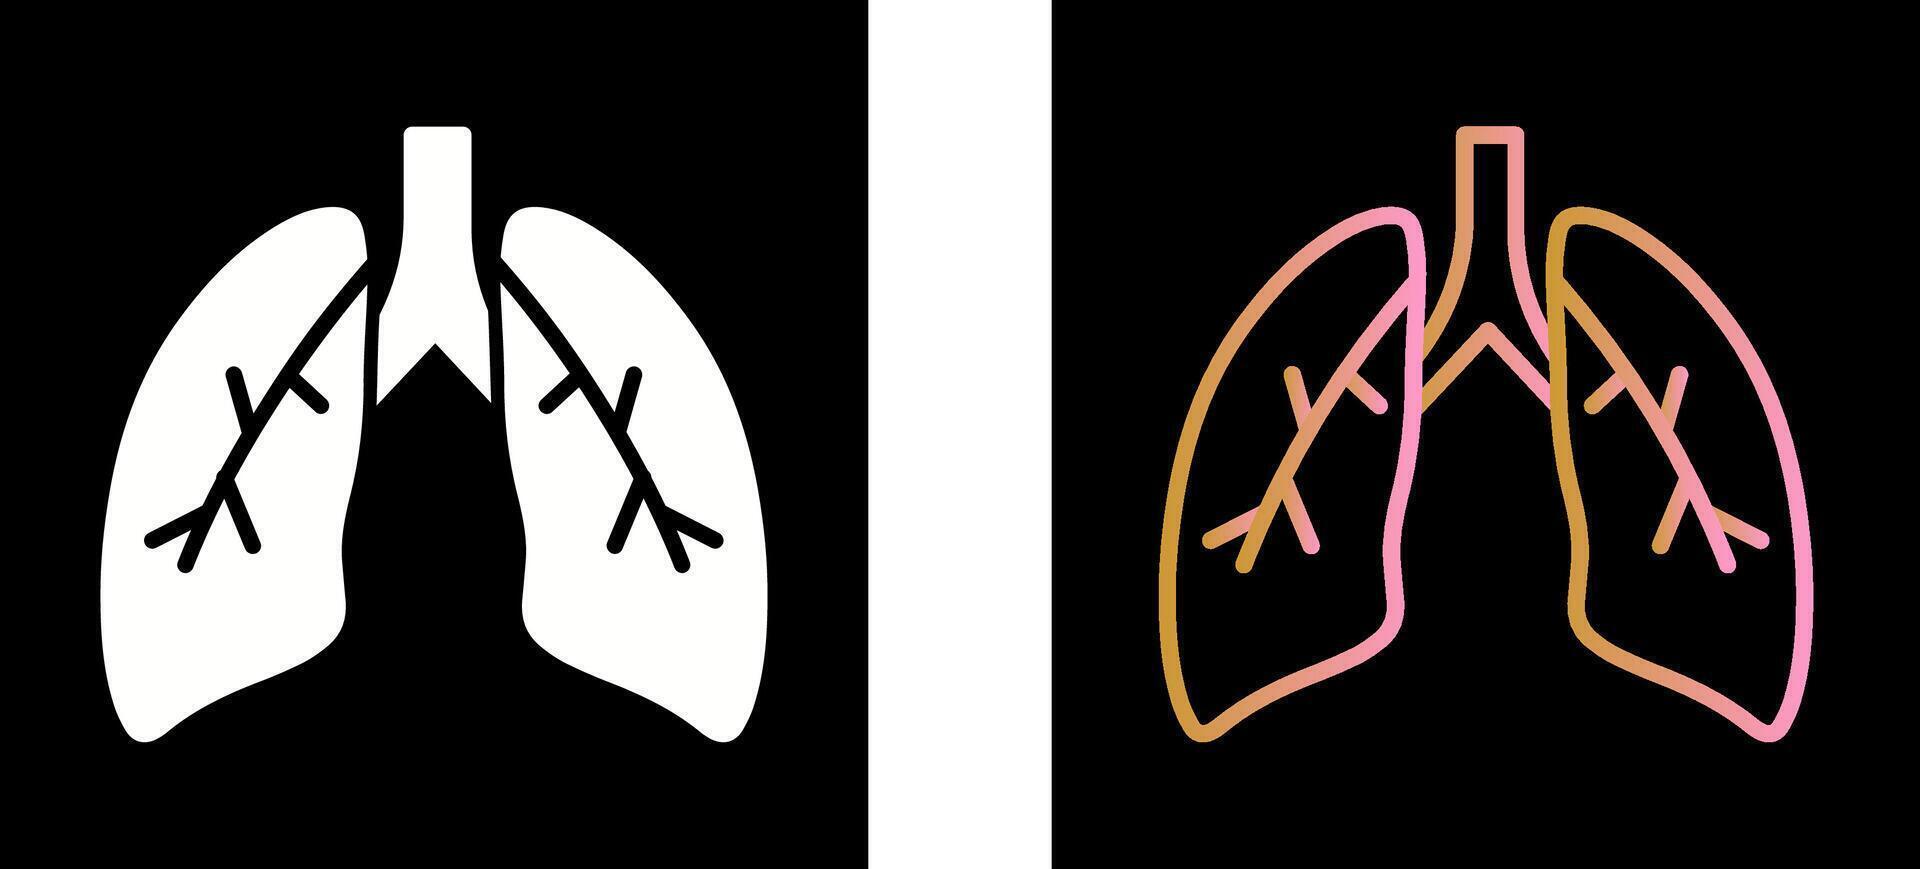 Lungs Icon Design vector